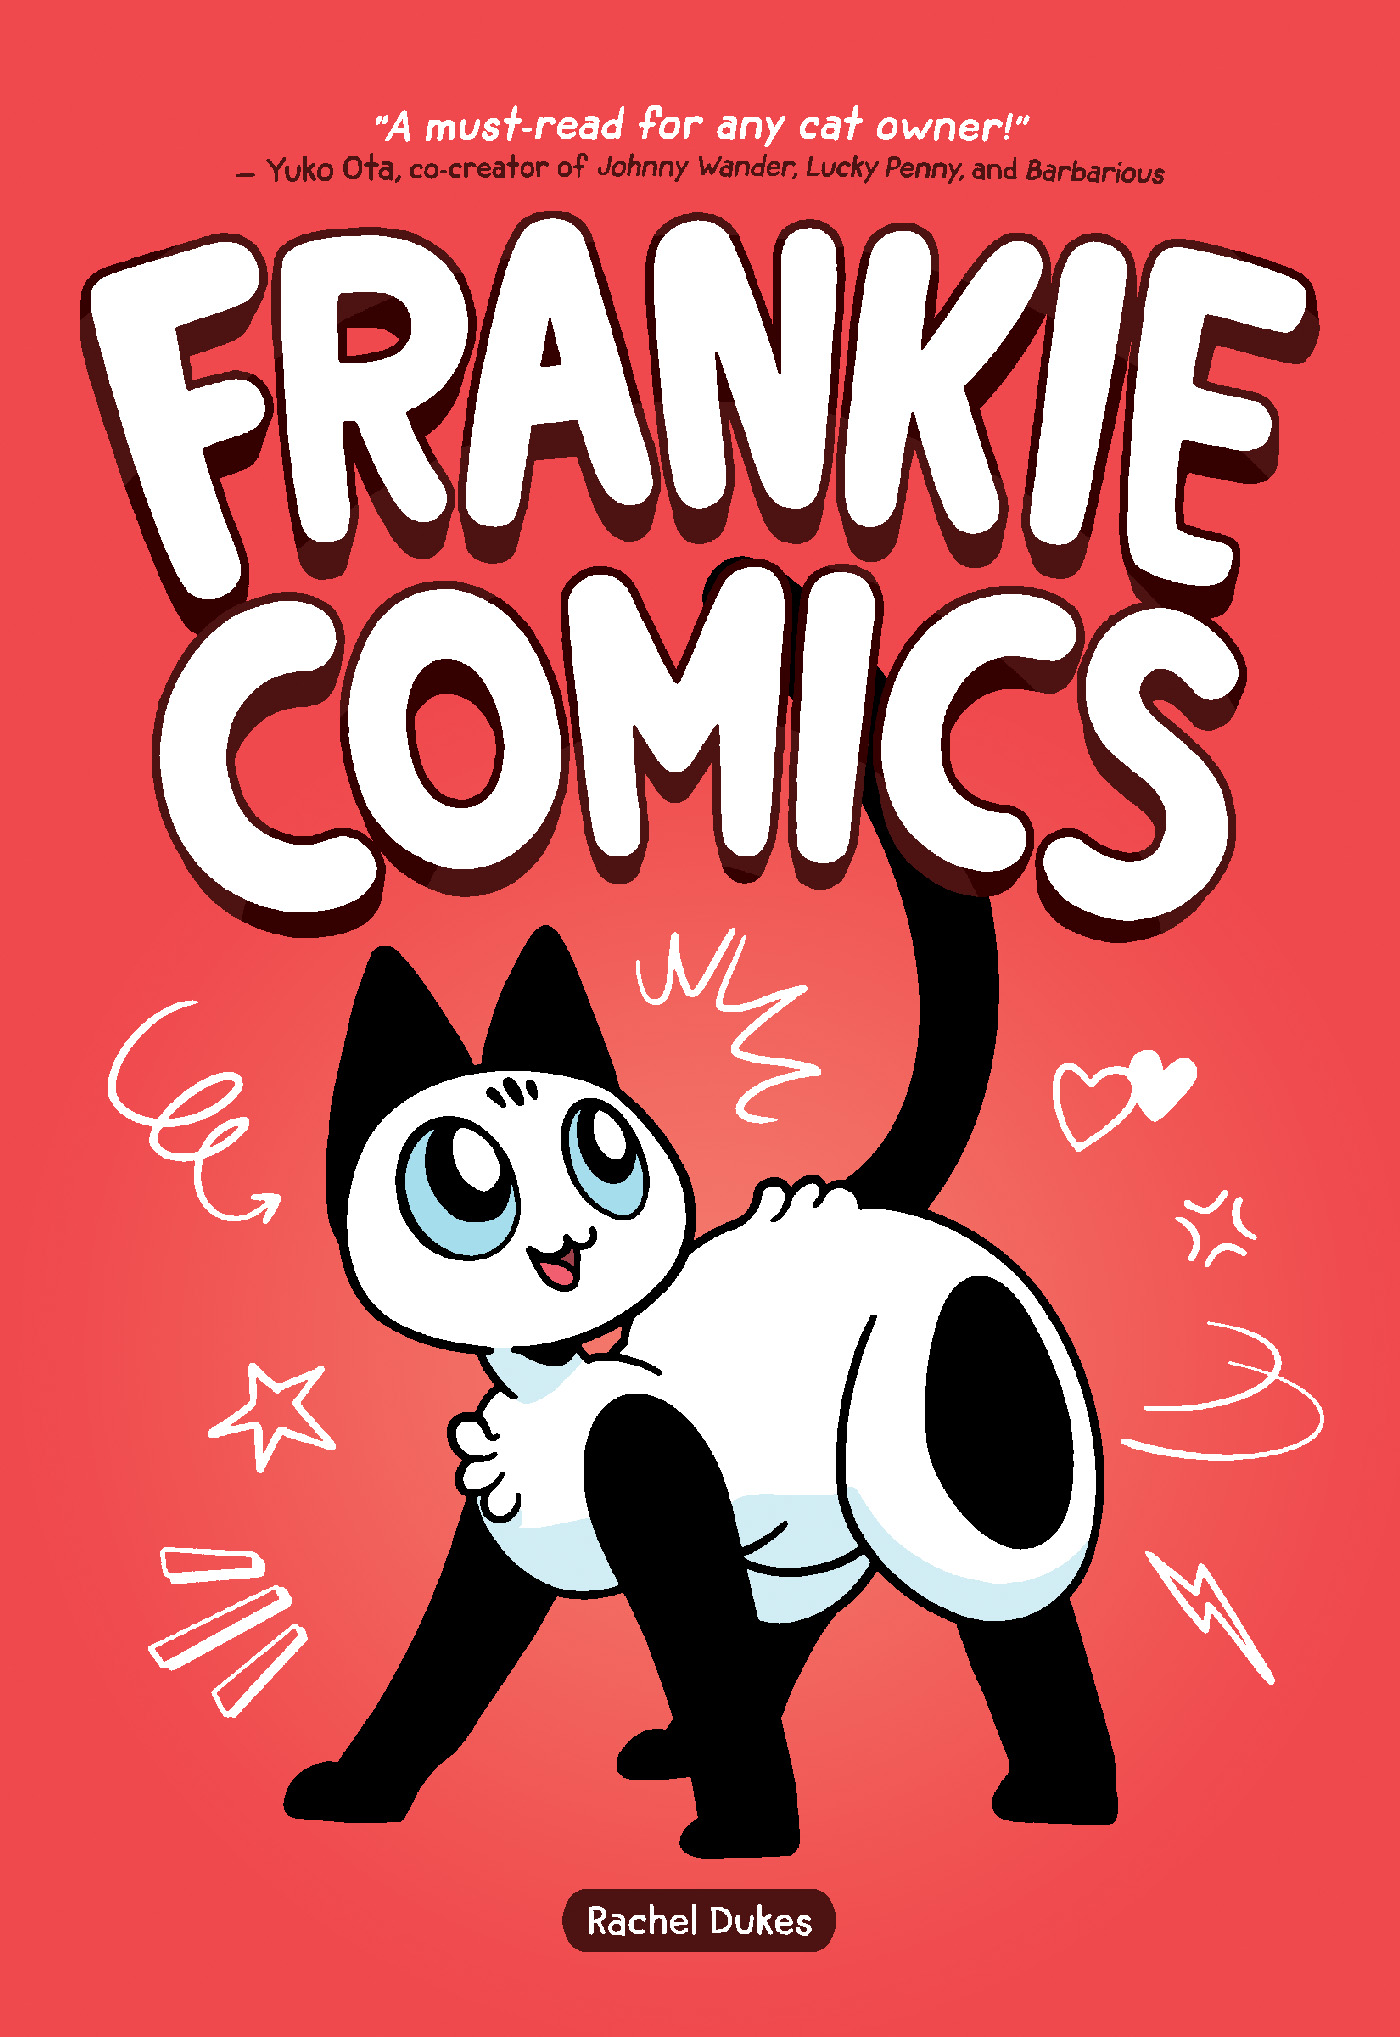 Frankie Comics Graphic Novel